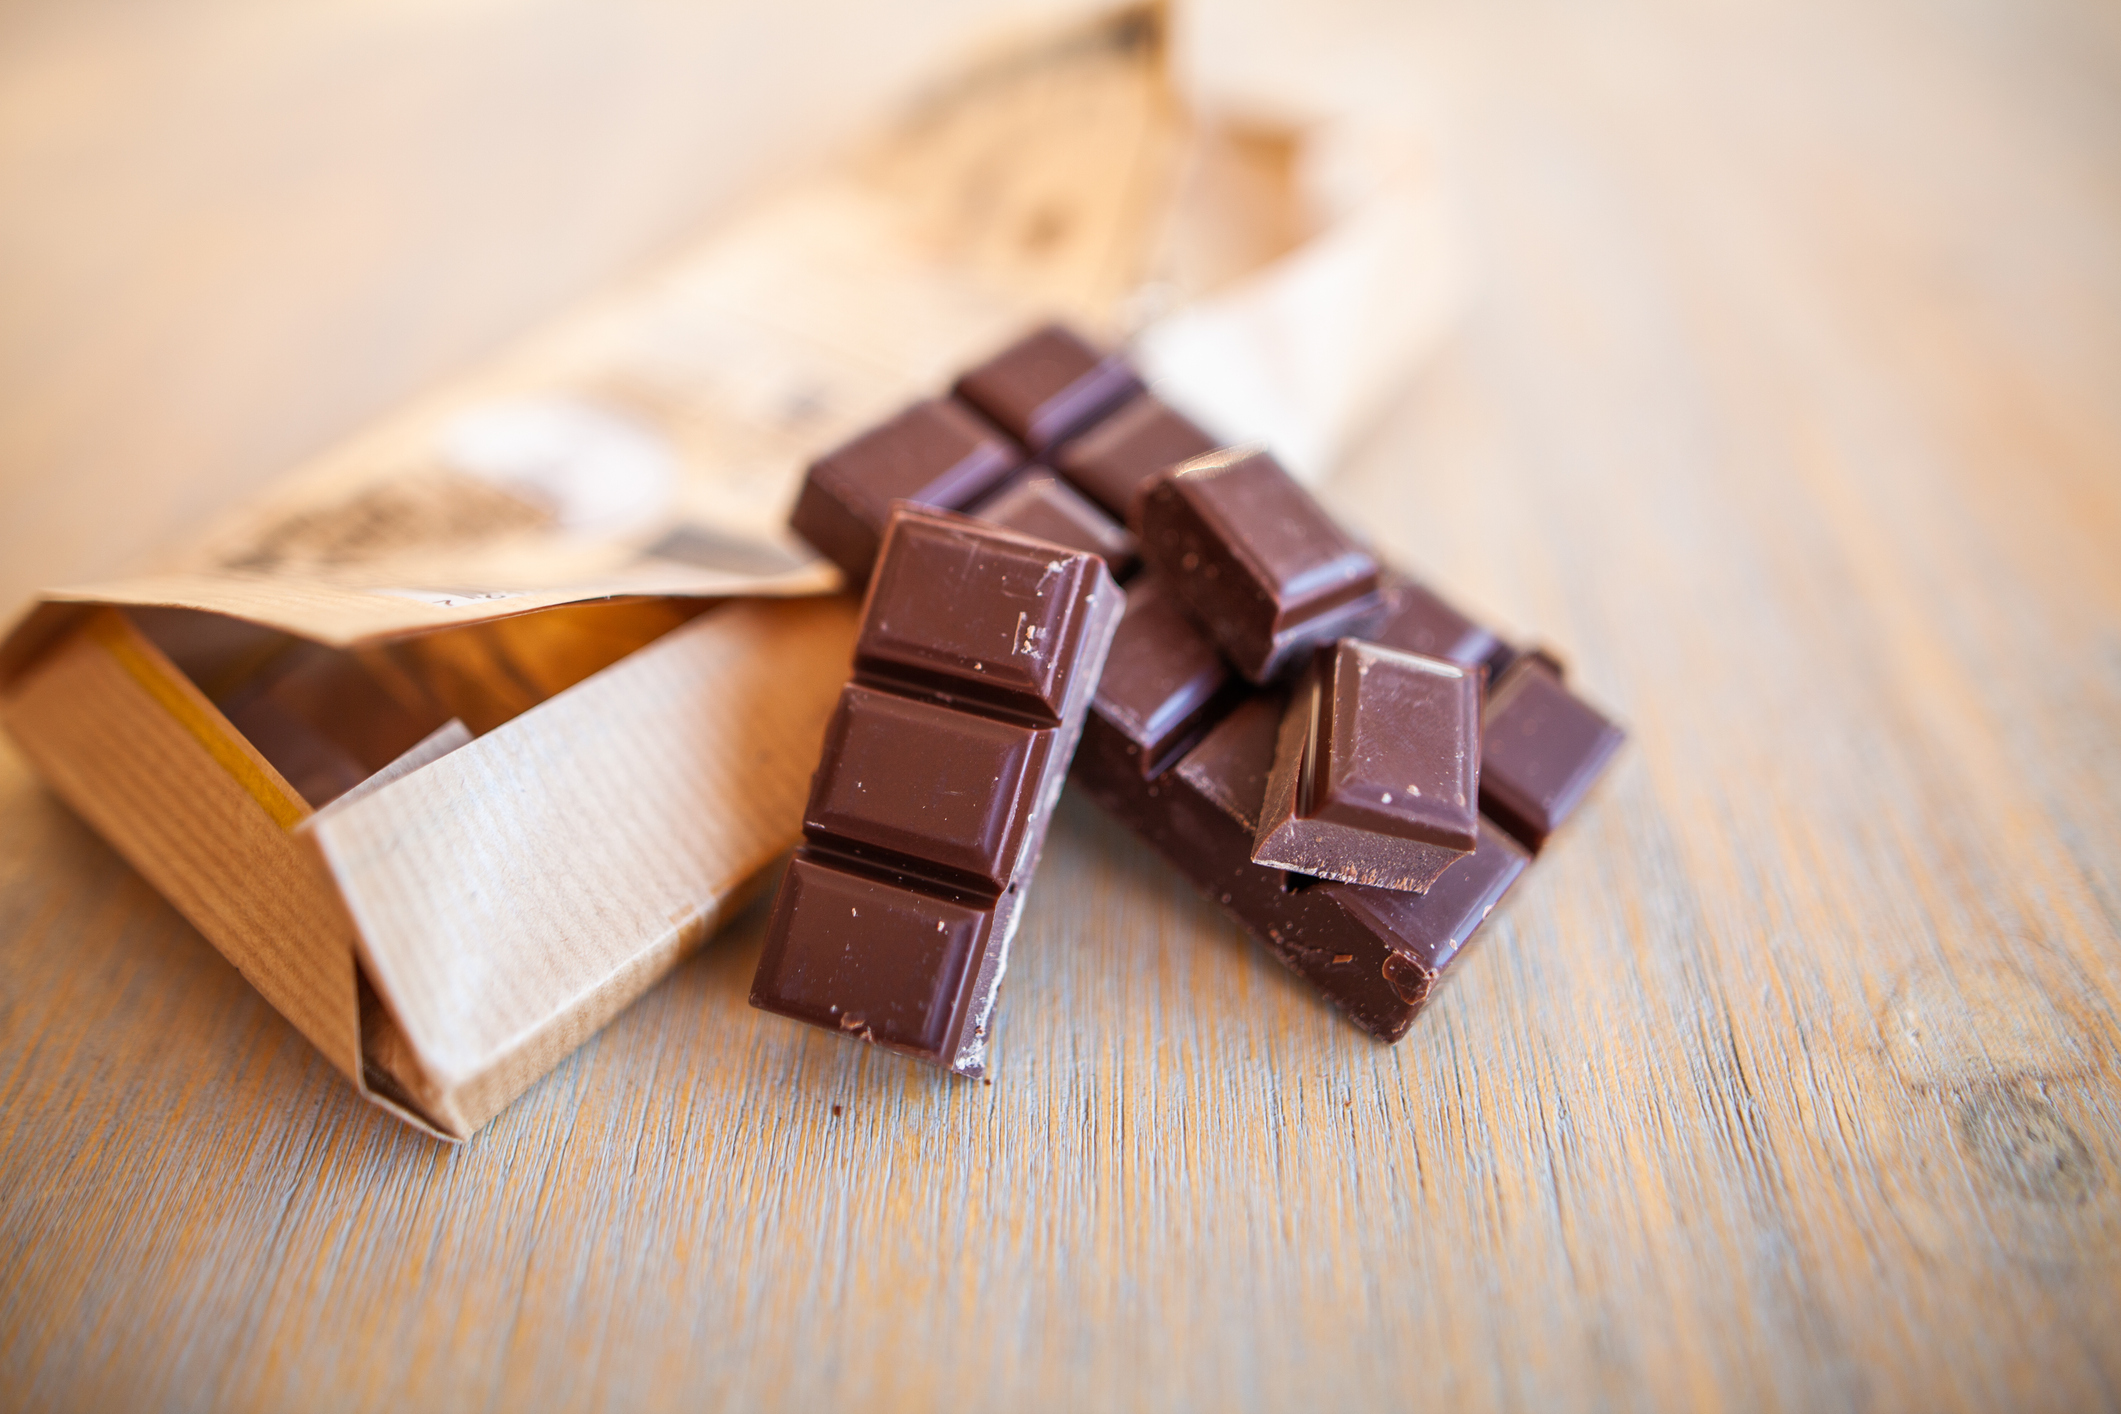 Monique Keiran: When eight-cent chocolate bars left a sour taste